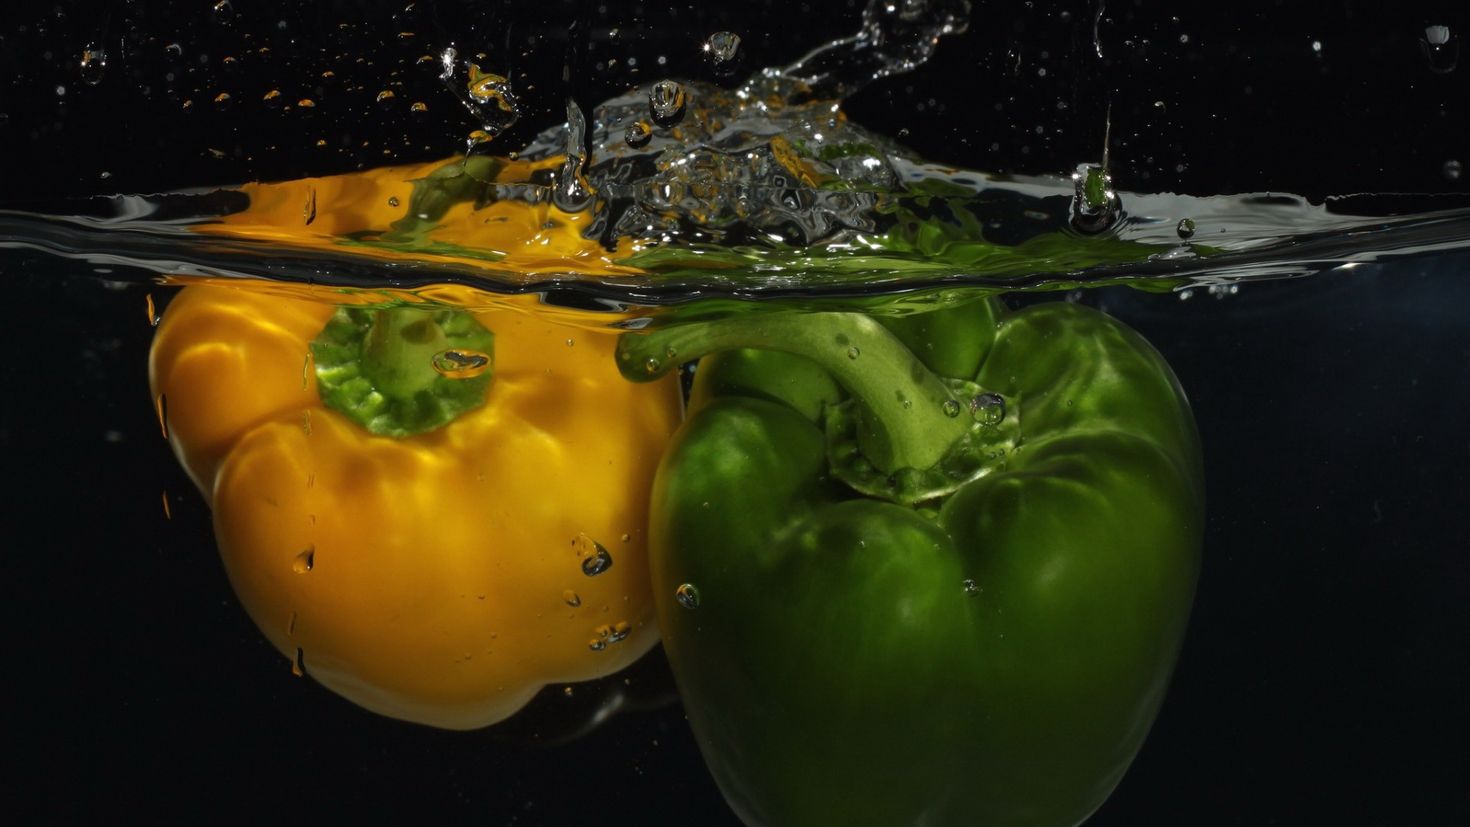 Water pepper. Овощи в воде. Помидор в воде. Овощи фрукты на черном фоне. Овощи на темном фоне.